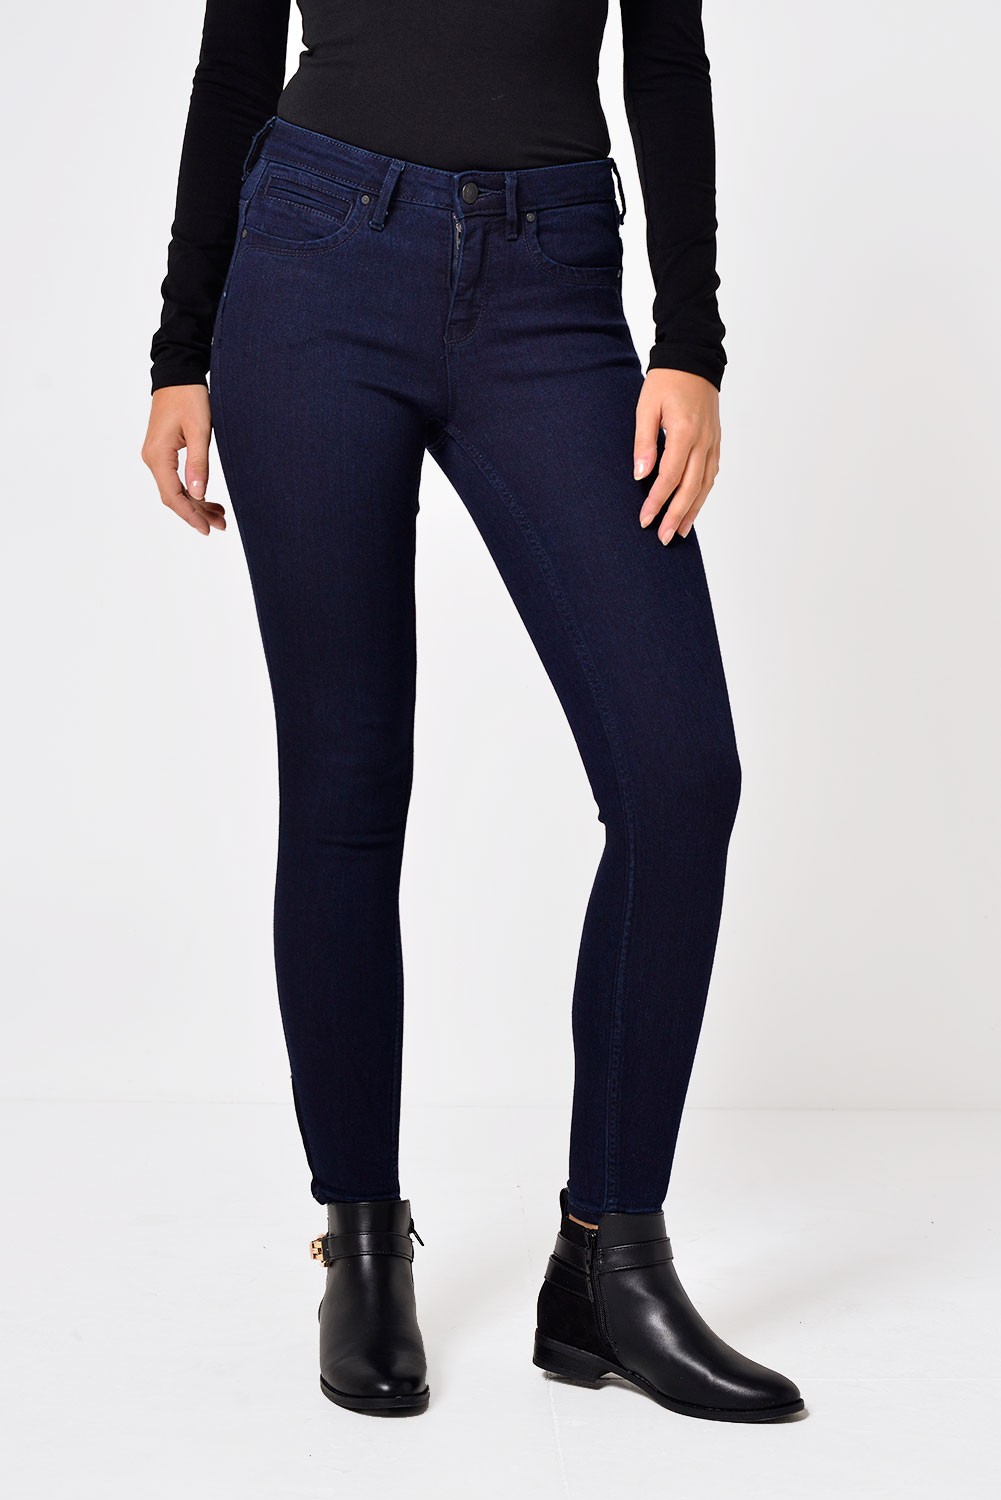 Only Kendell Long Ankle Zip Skinny Jeans in Dark Blue | iCLOTHING